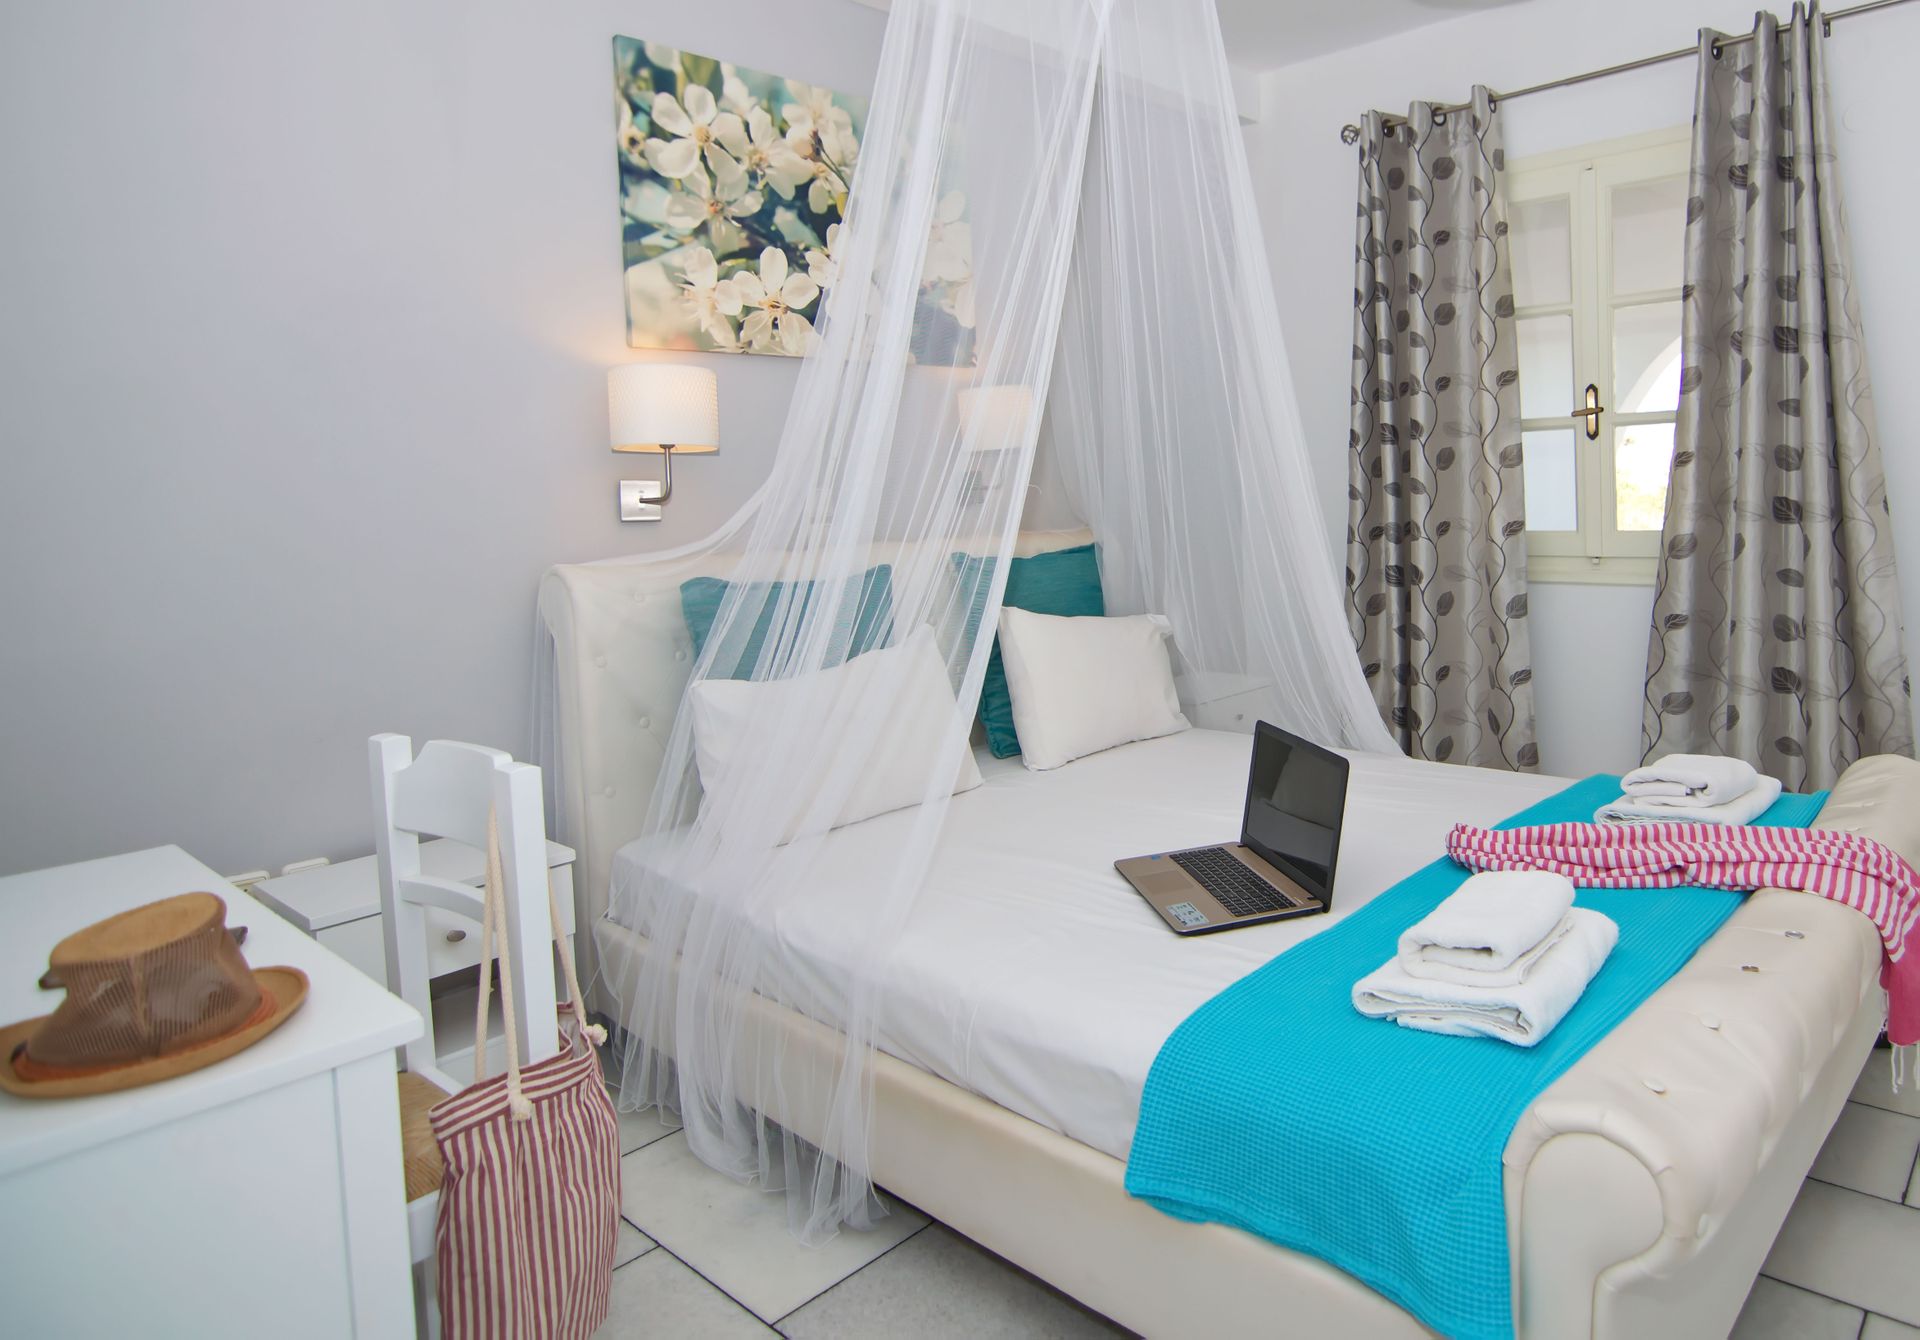 Camara Hotel - Άγιος Προκόπιος, Νάξος ✦ -20% ✦ 2 Ημέρες